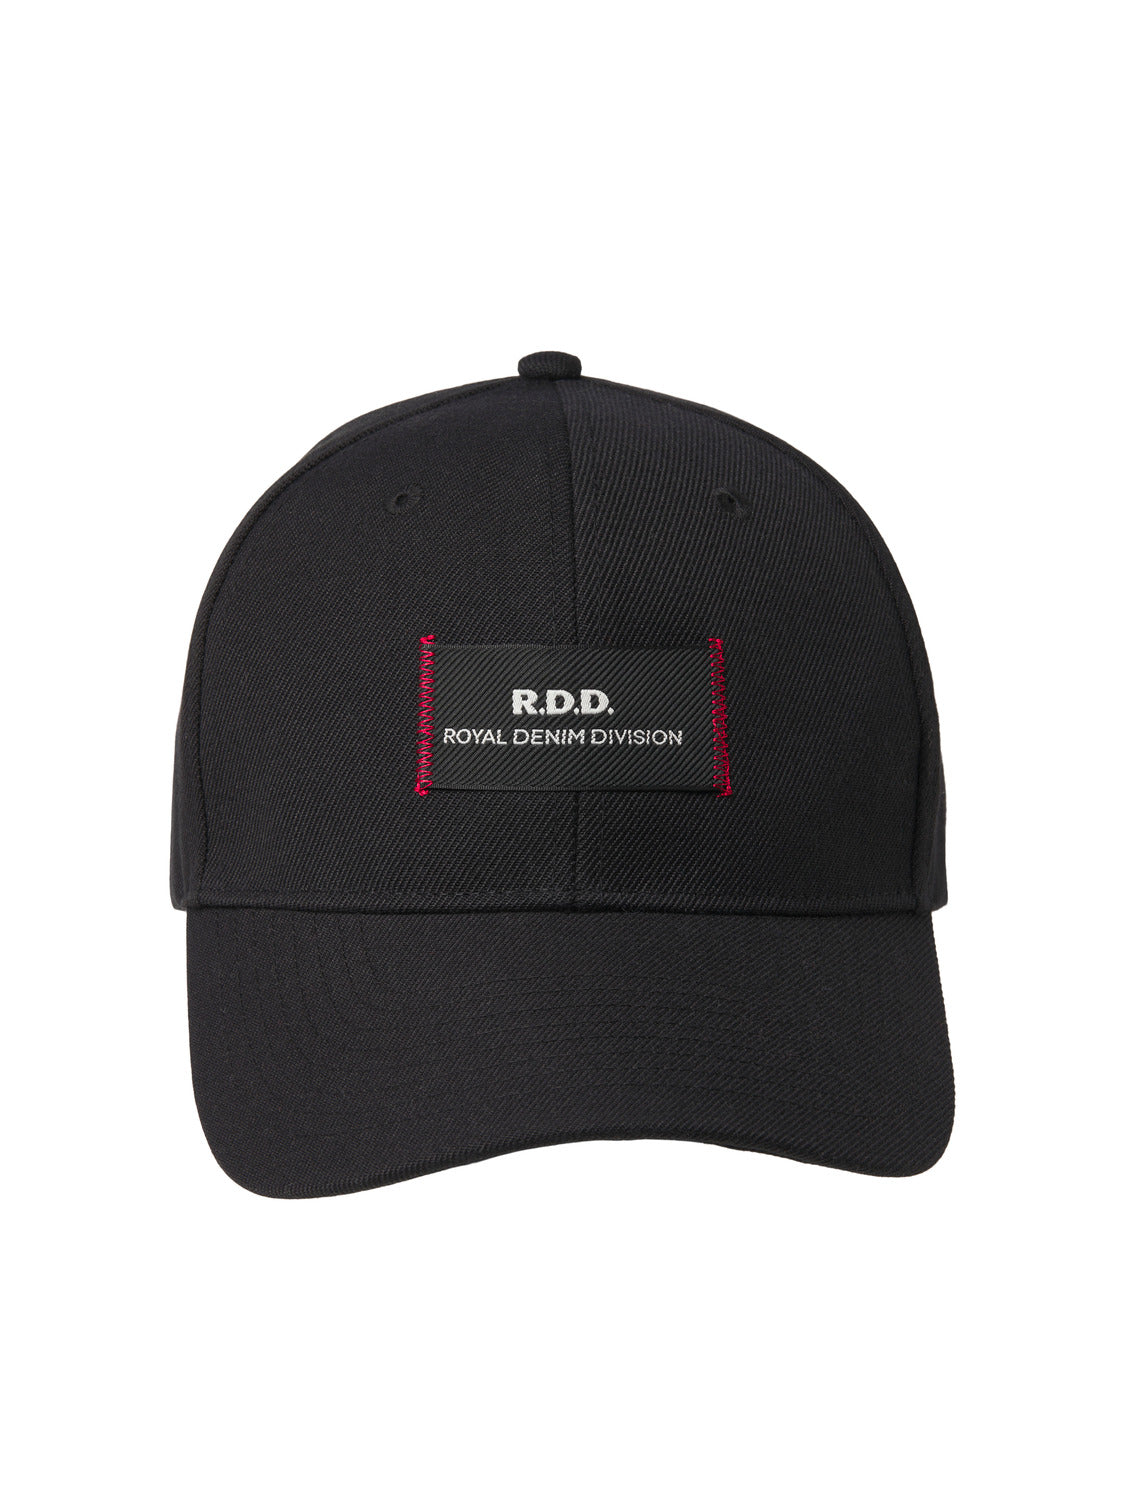 RDDROYAL Cap - Black